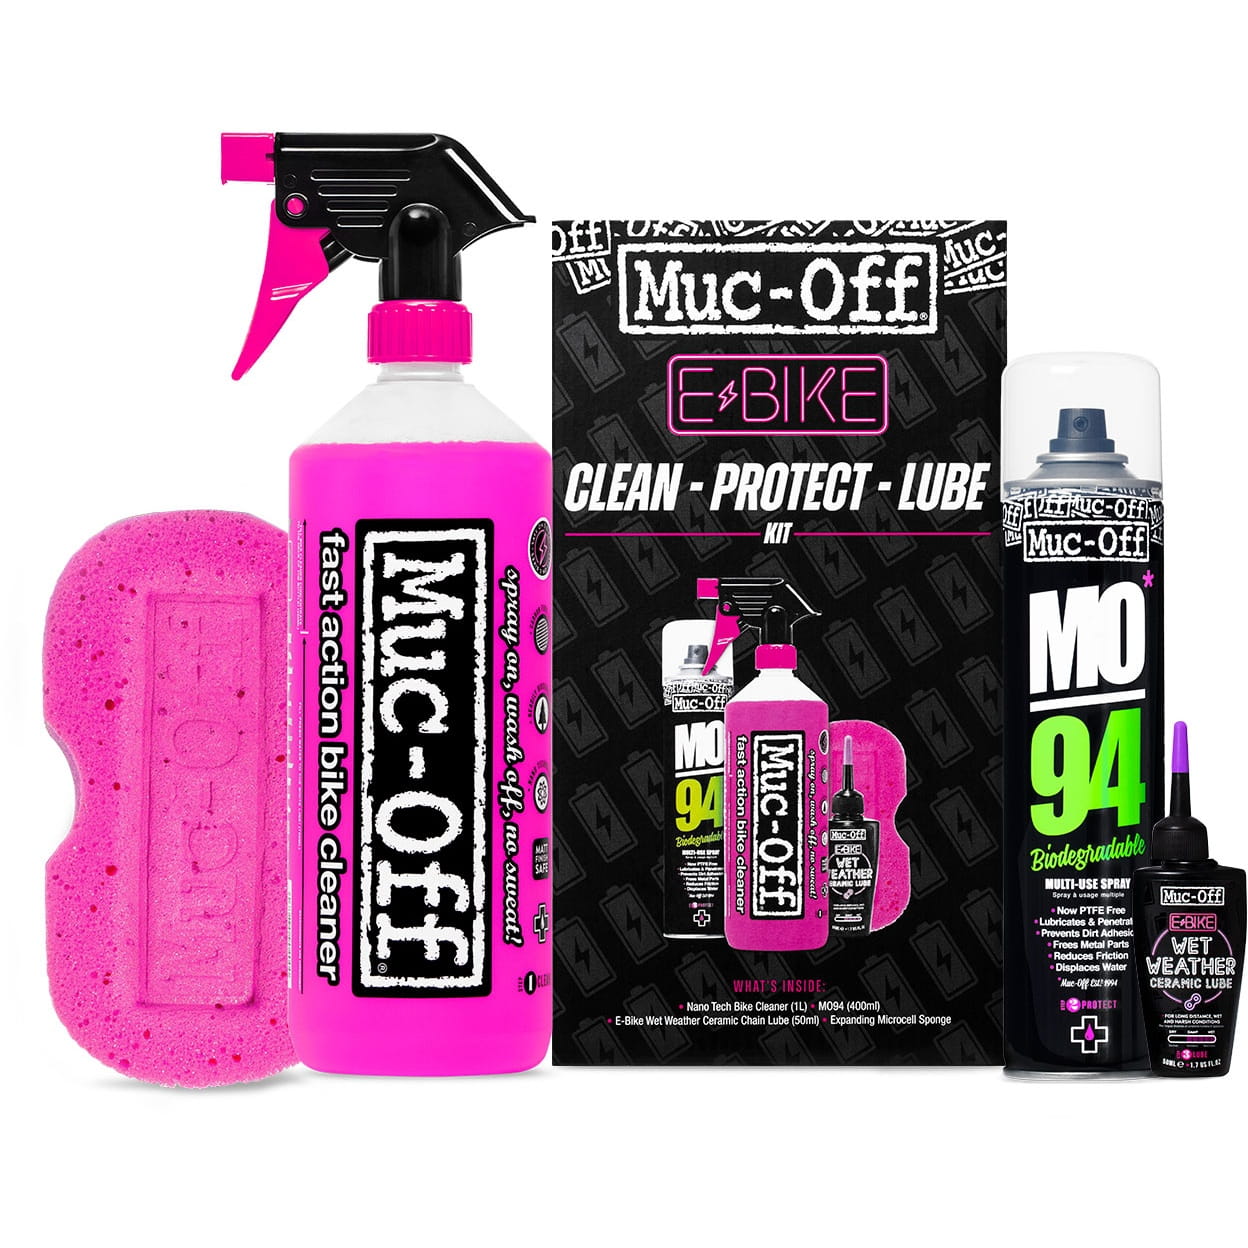 Muc Off E-Bike Clean, Protect & Lube Kit (Wet Lube Version), Bike Care